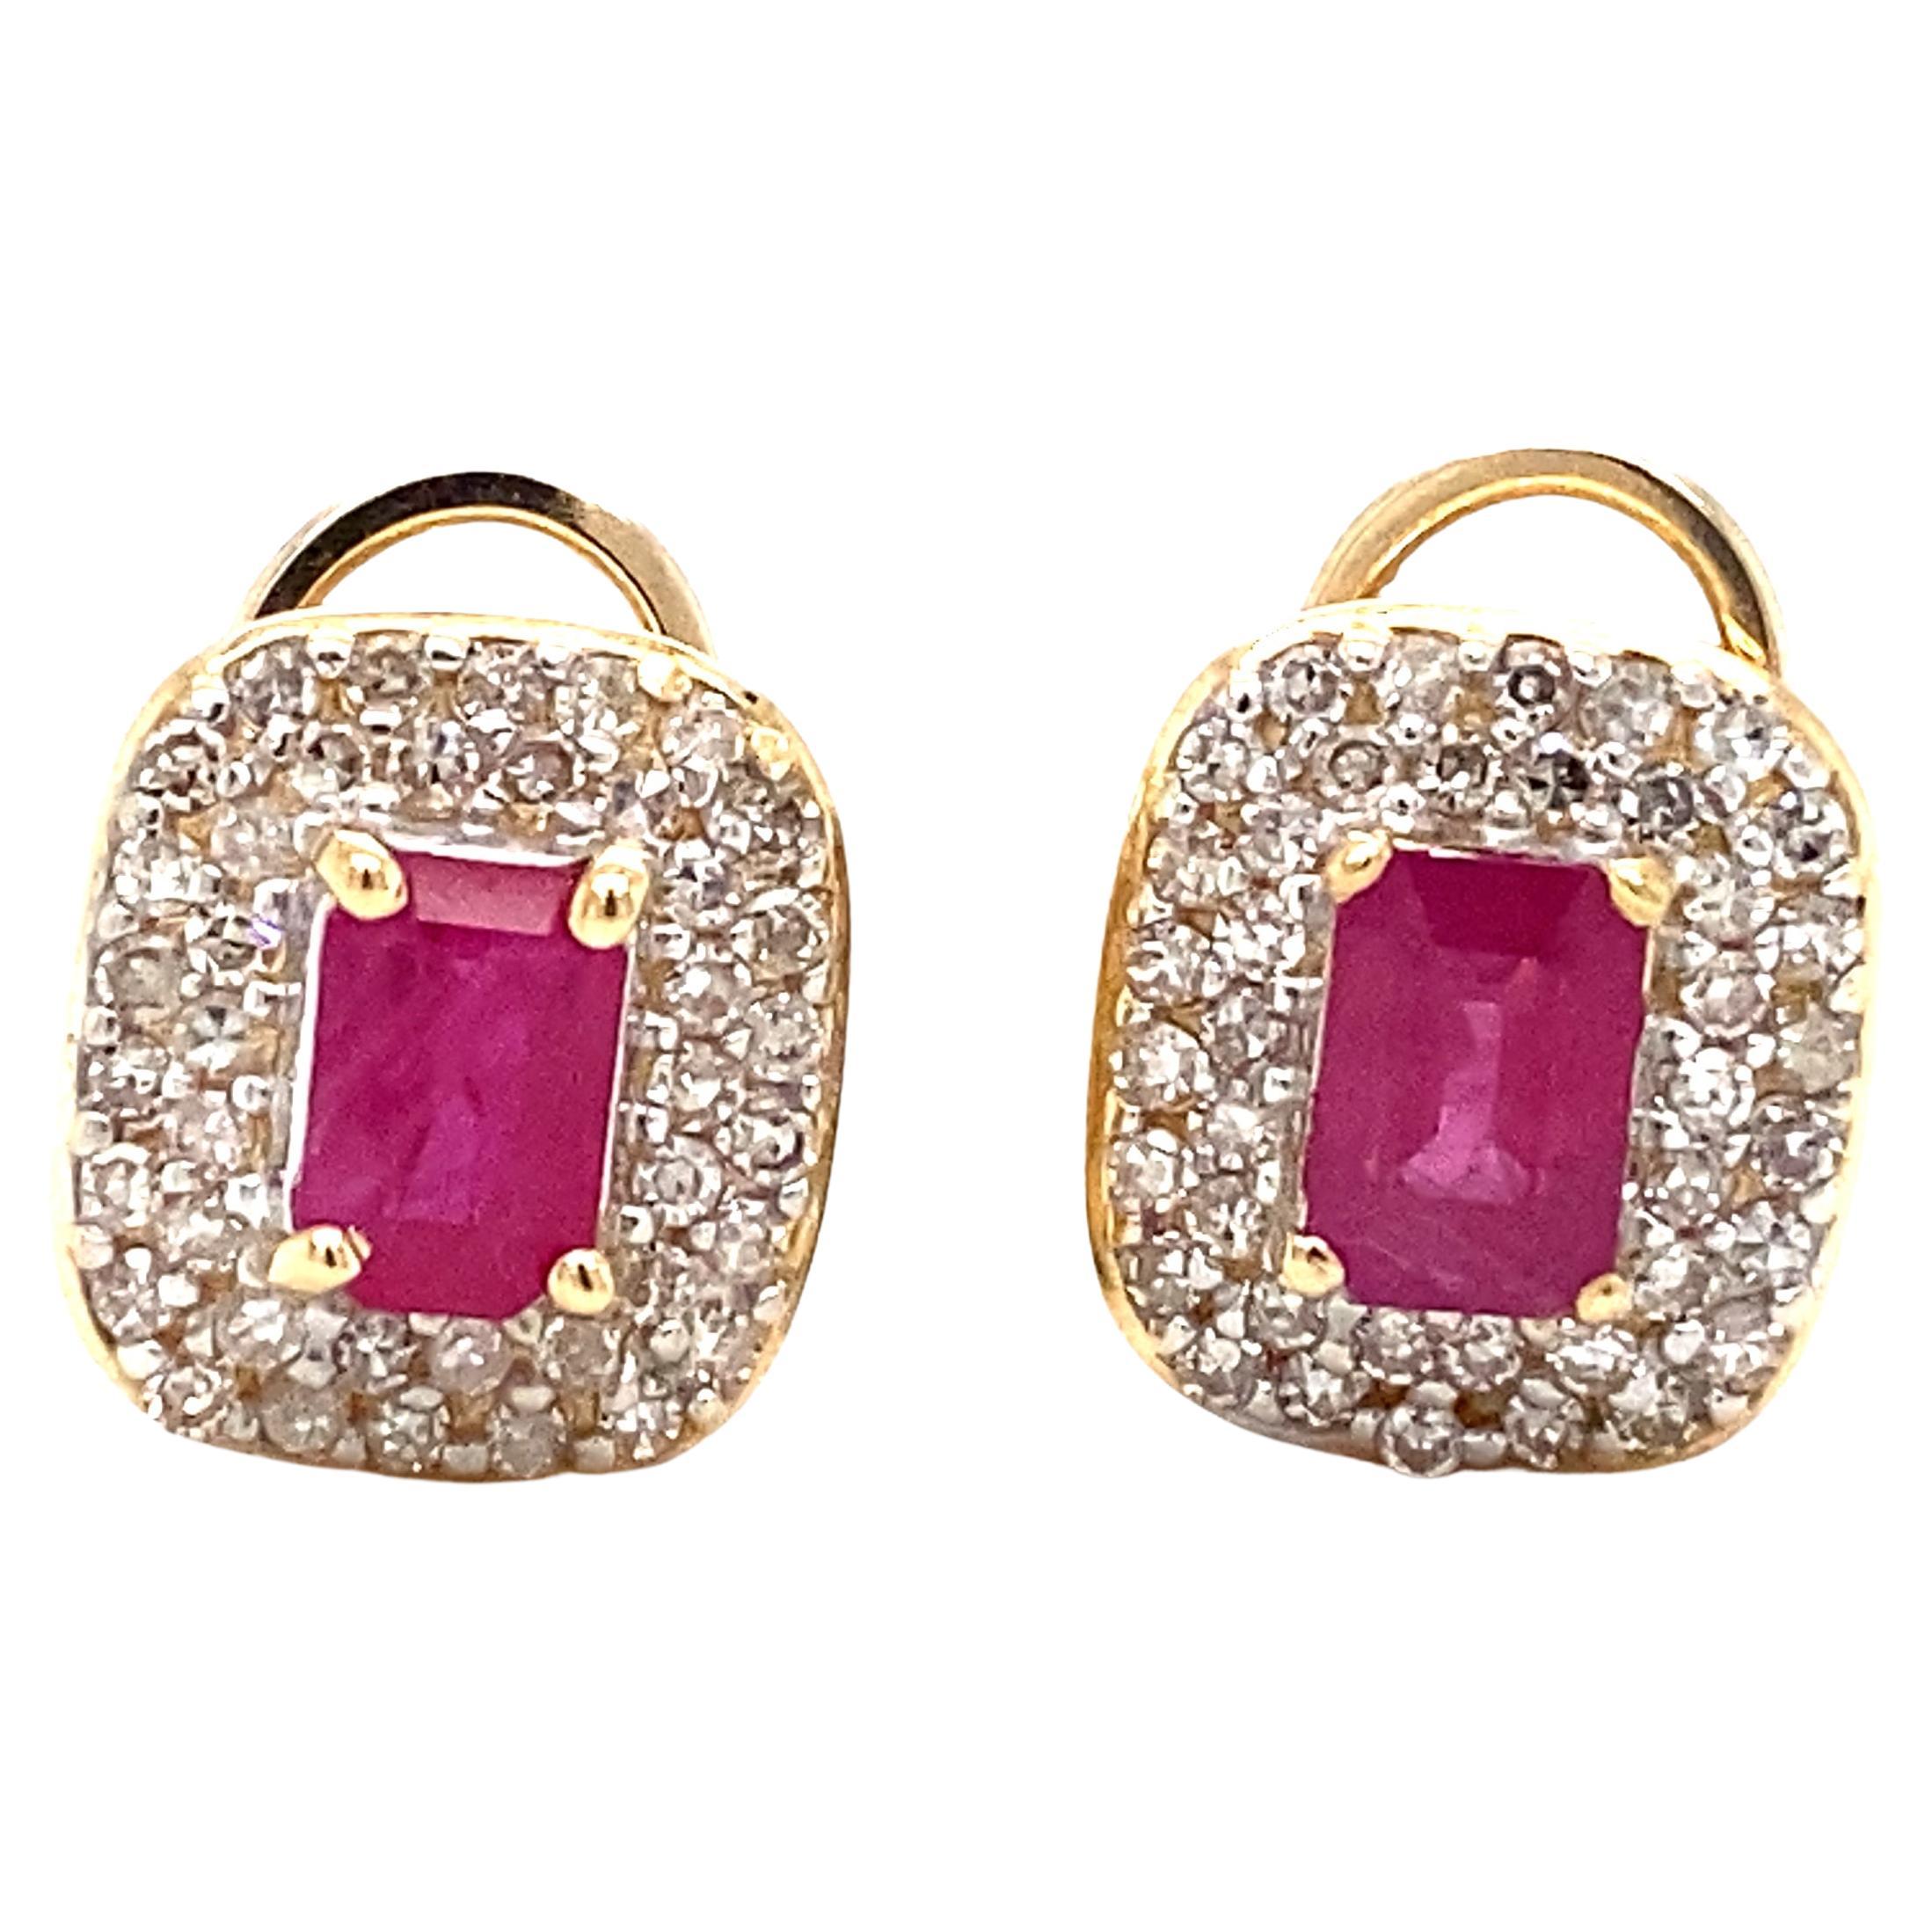 1990s 0.60 Carat Ruby and 1 Carat Diamond Earrings in 18 Karat Yellow Gold